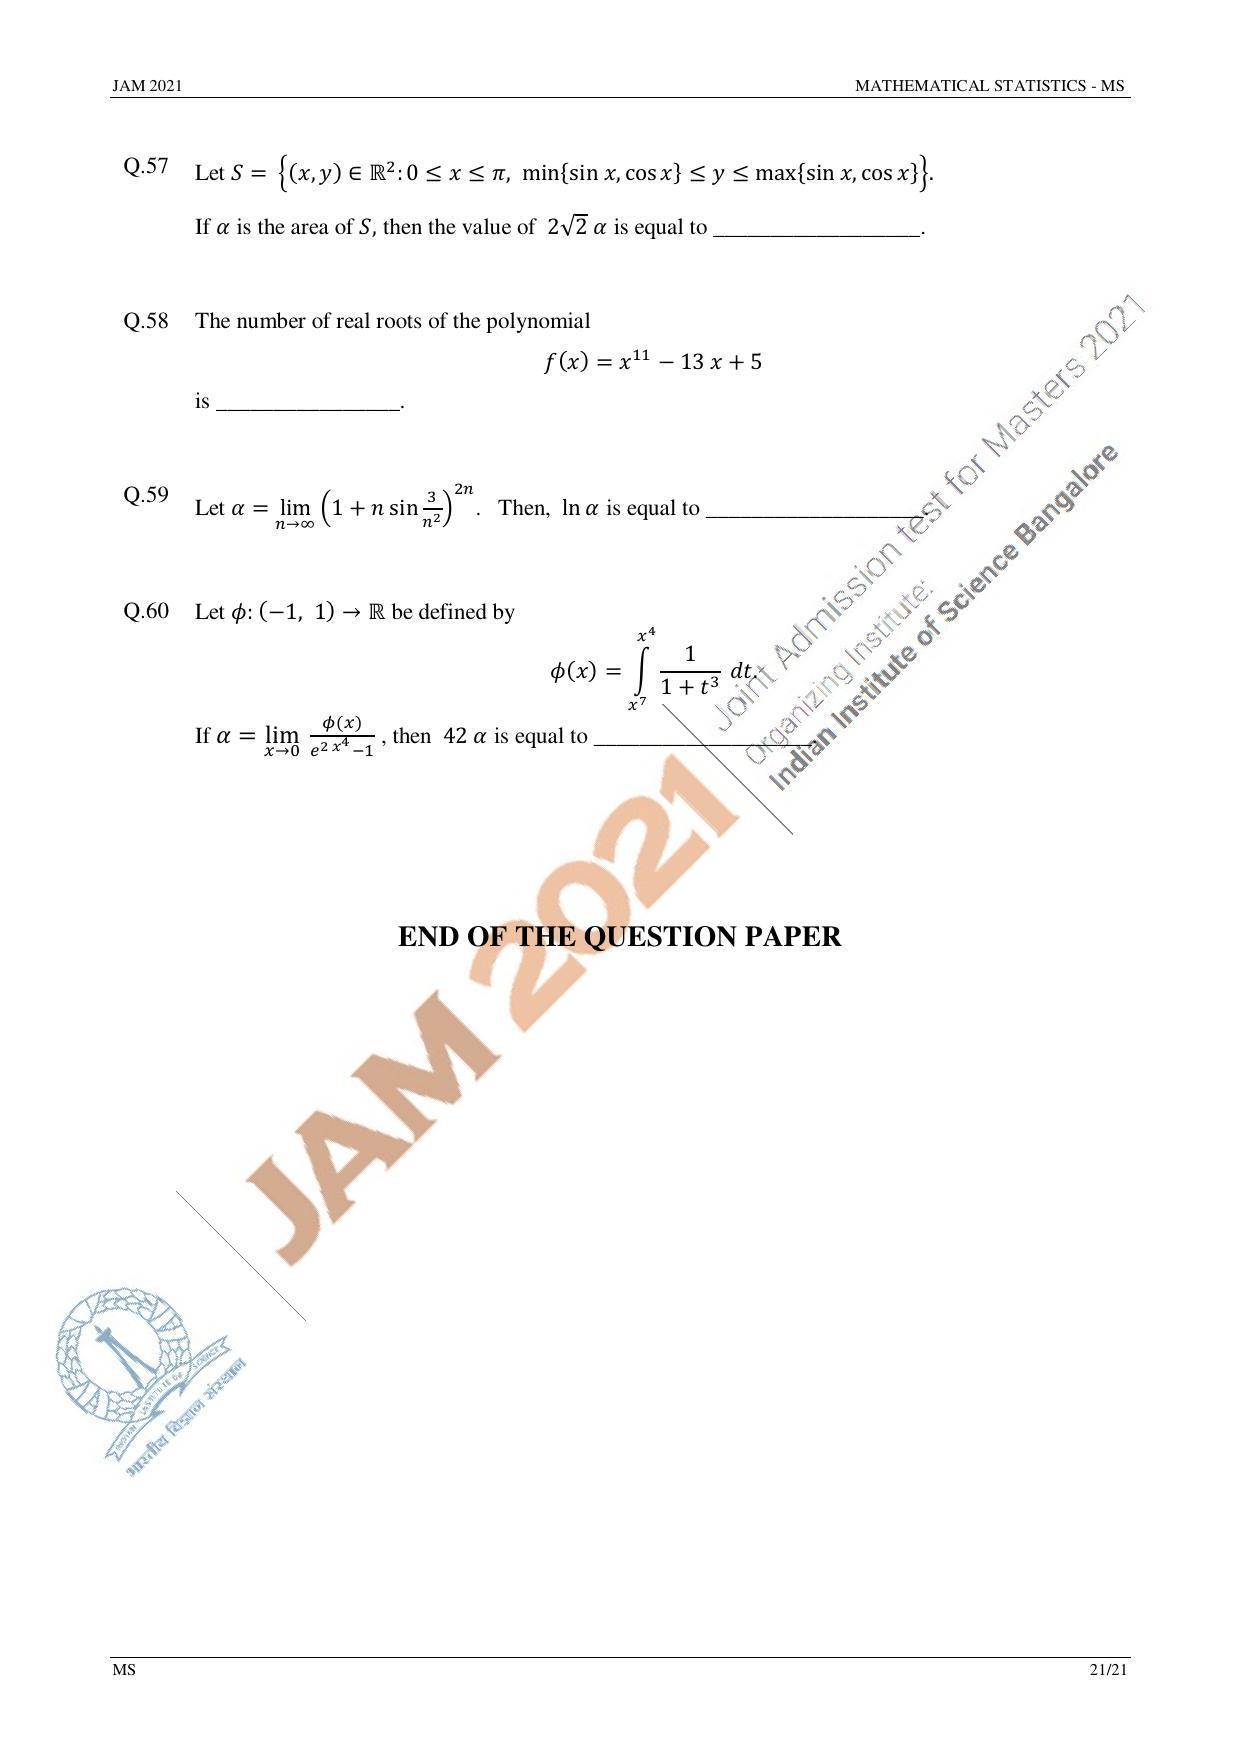 JAM 2021: MS Question Paper - Page 21